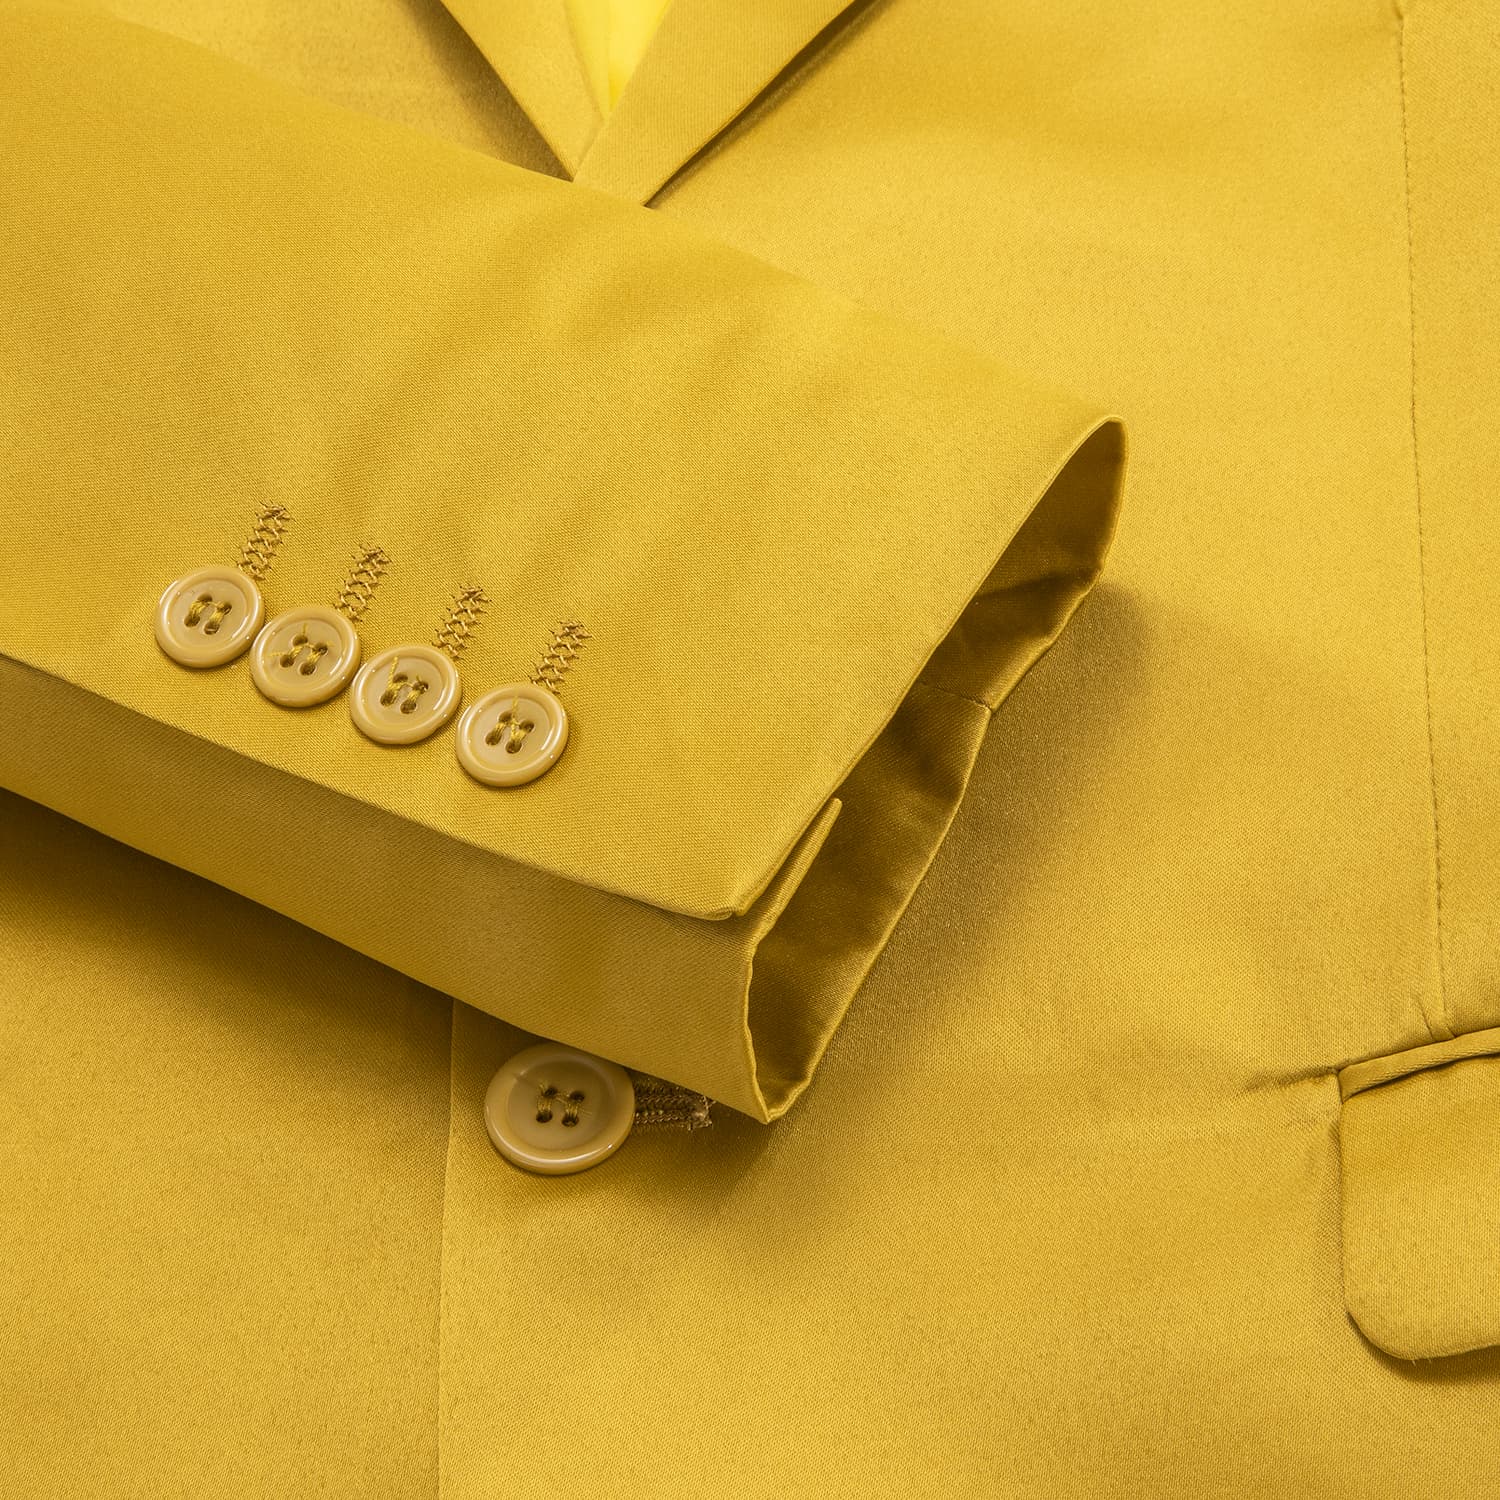 Hi-Tie Blazer Medallion Yellow Party Solid Top Men Suit